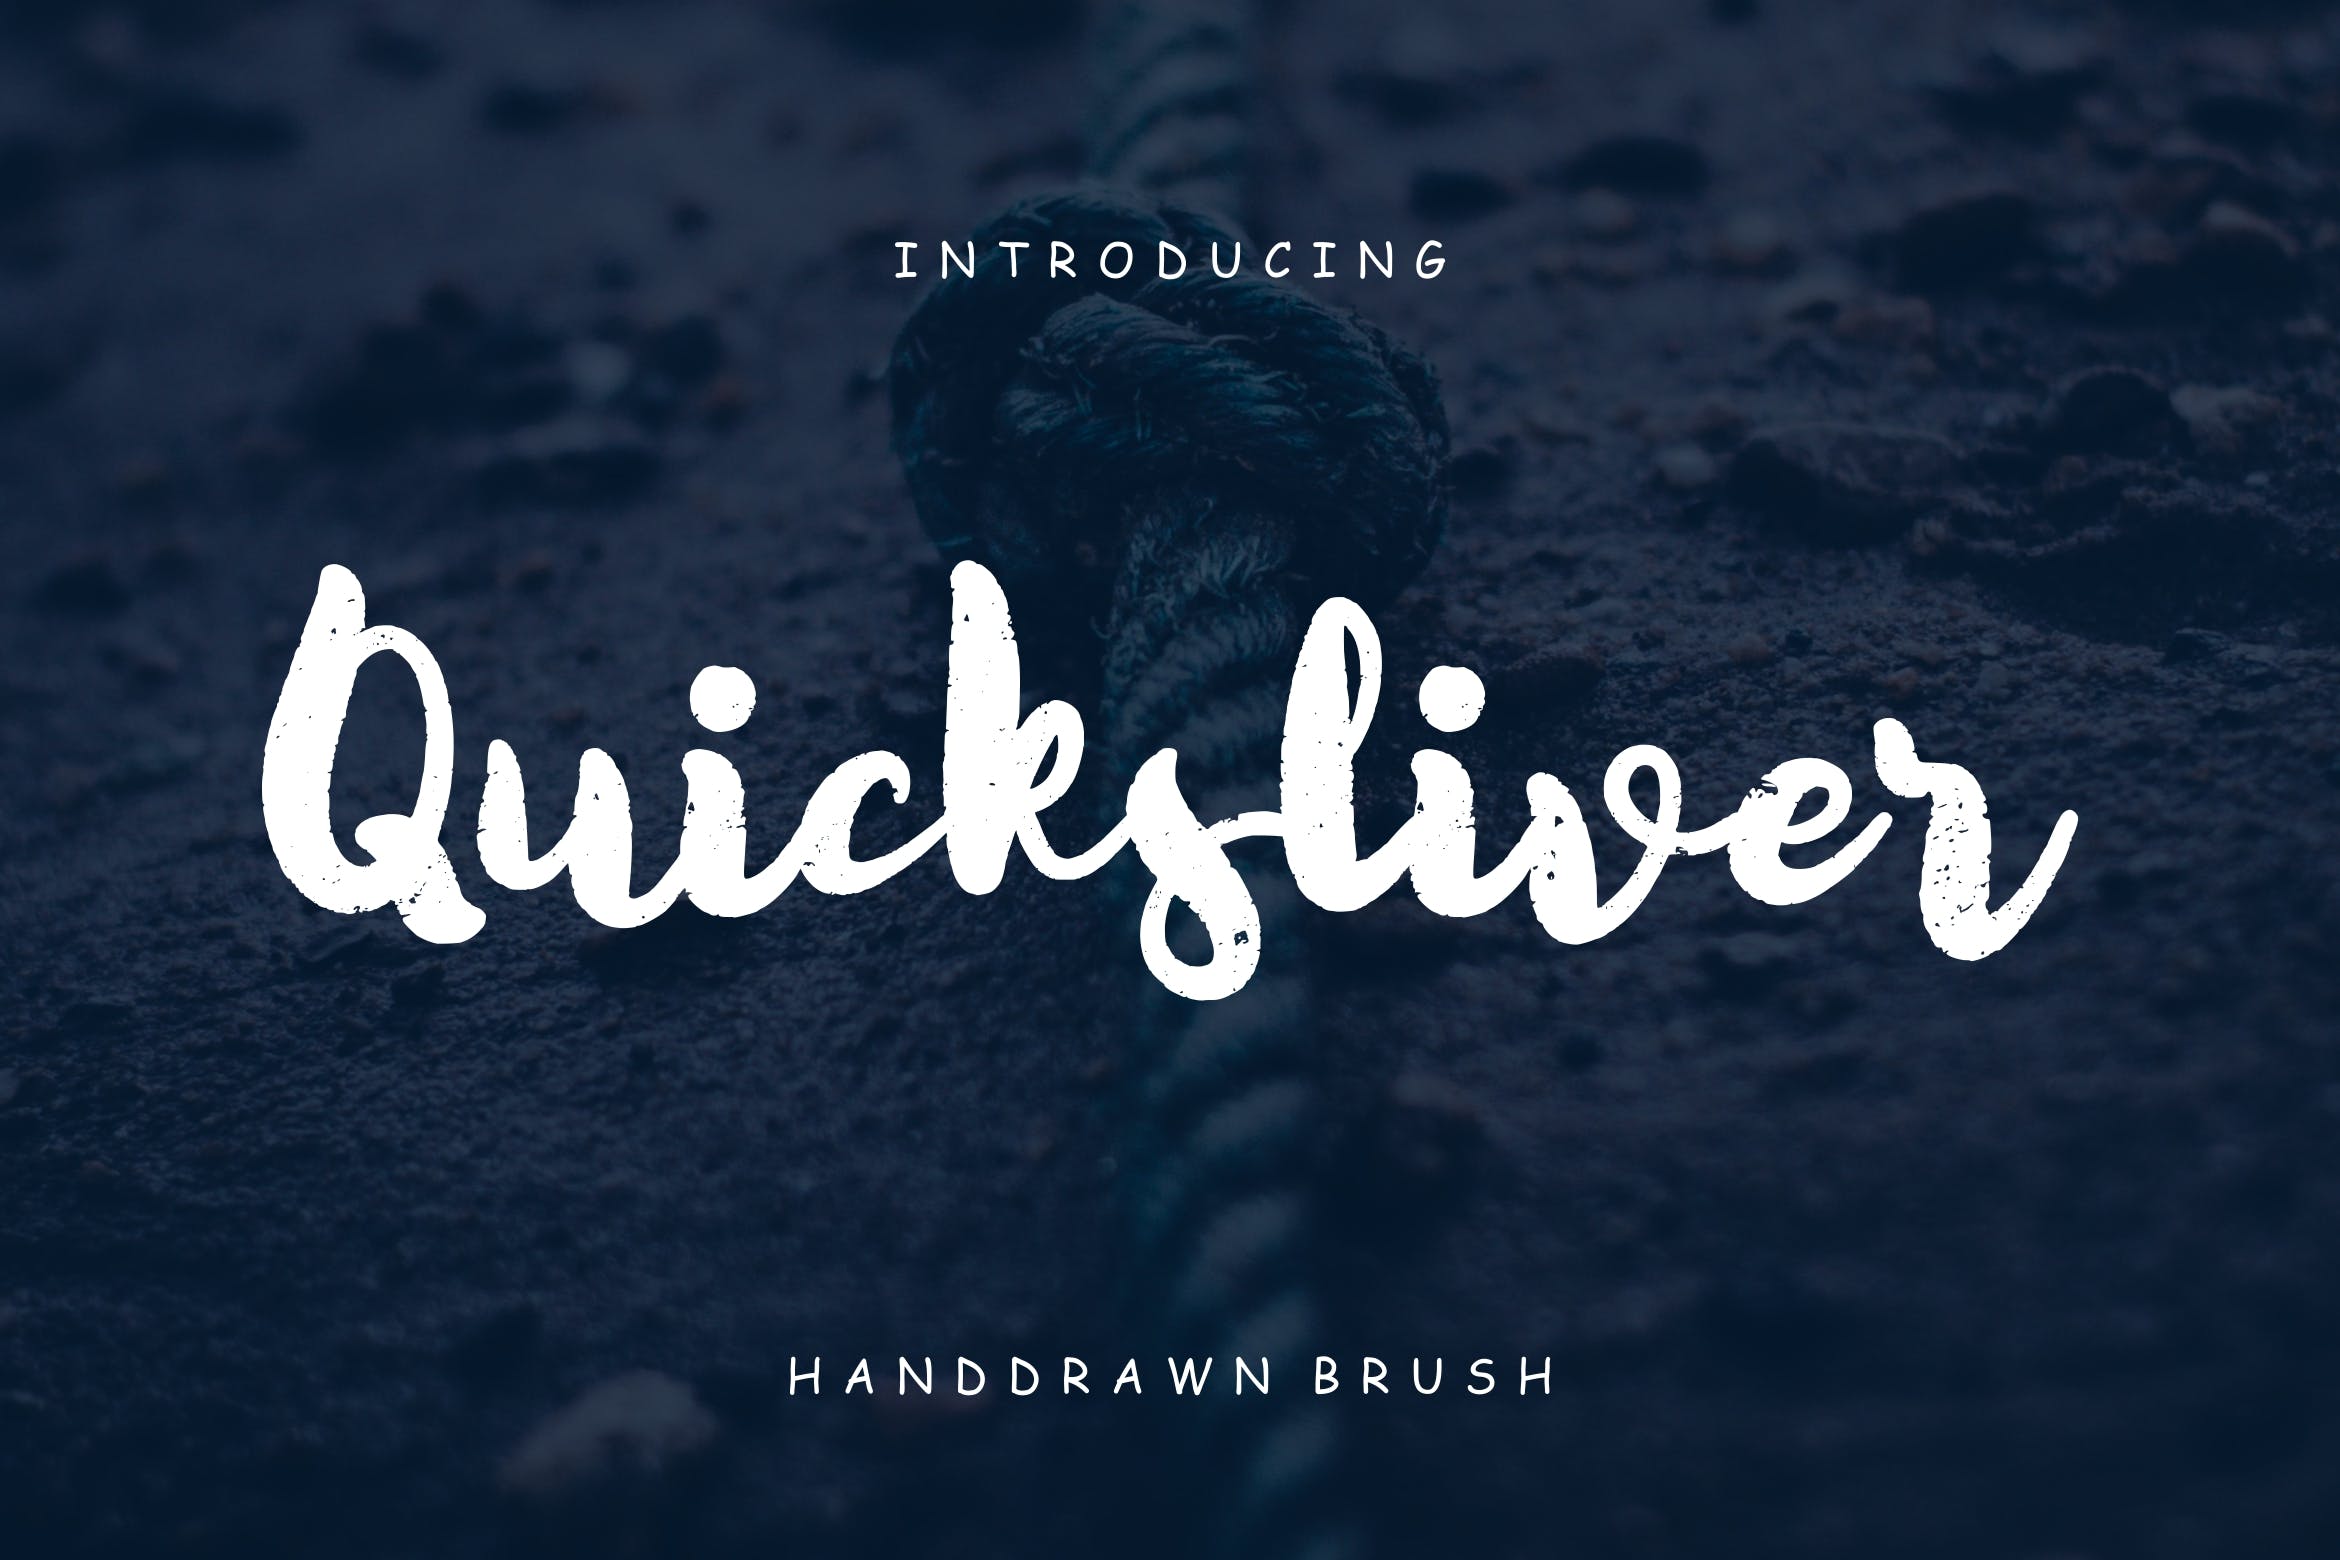 英文手绘粗体书法字体 Quicksliver Handdrawn Brush插图